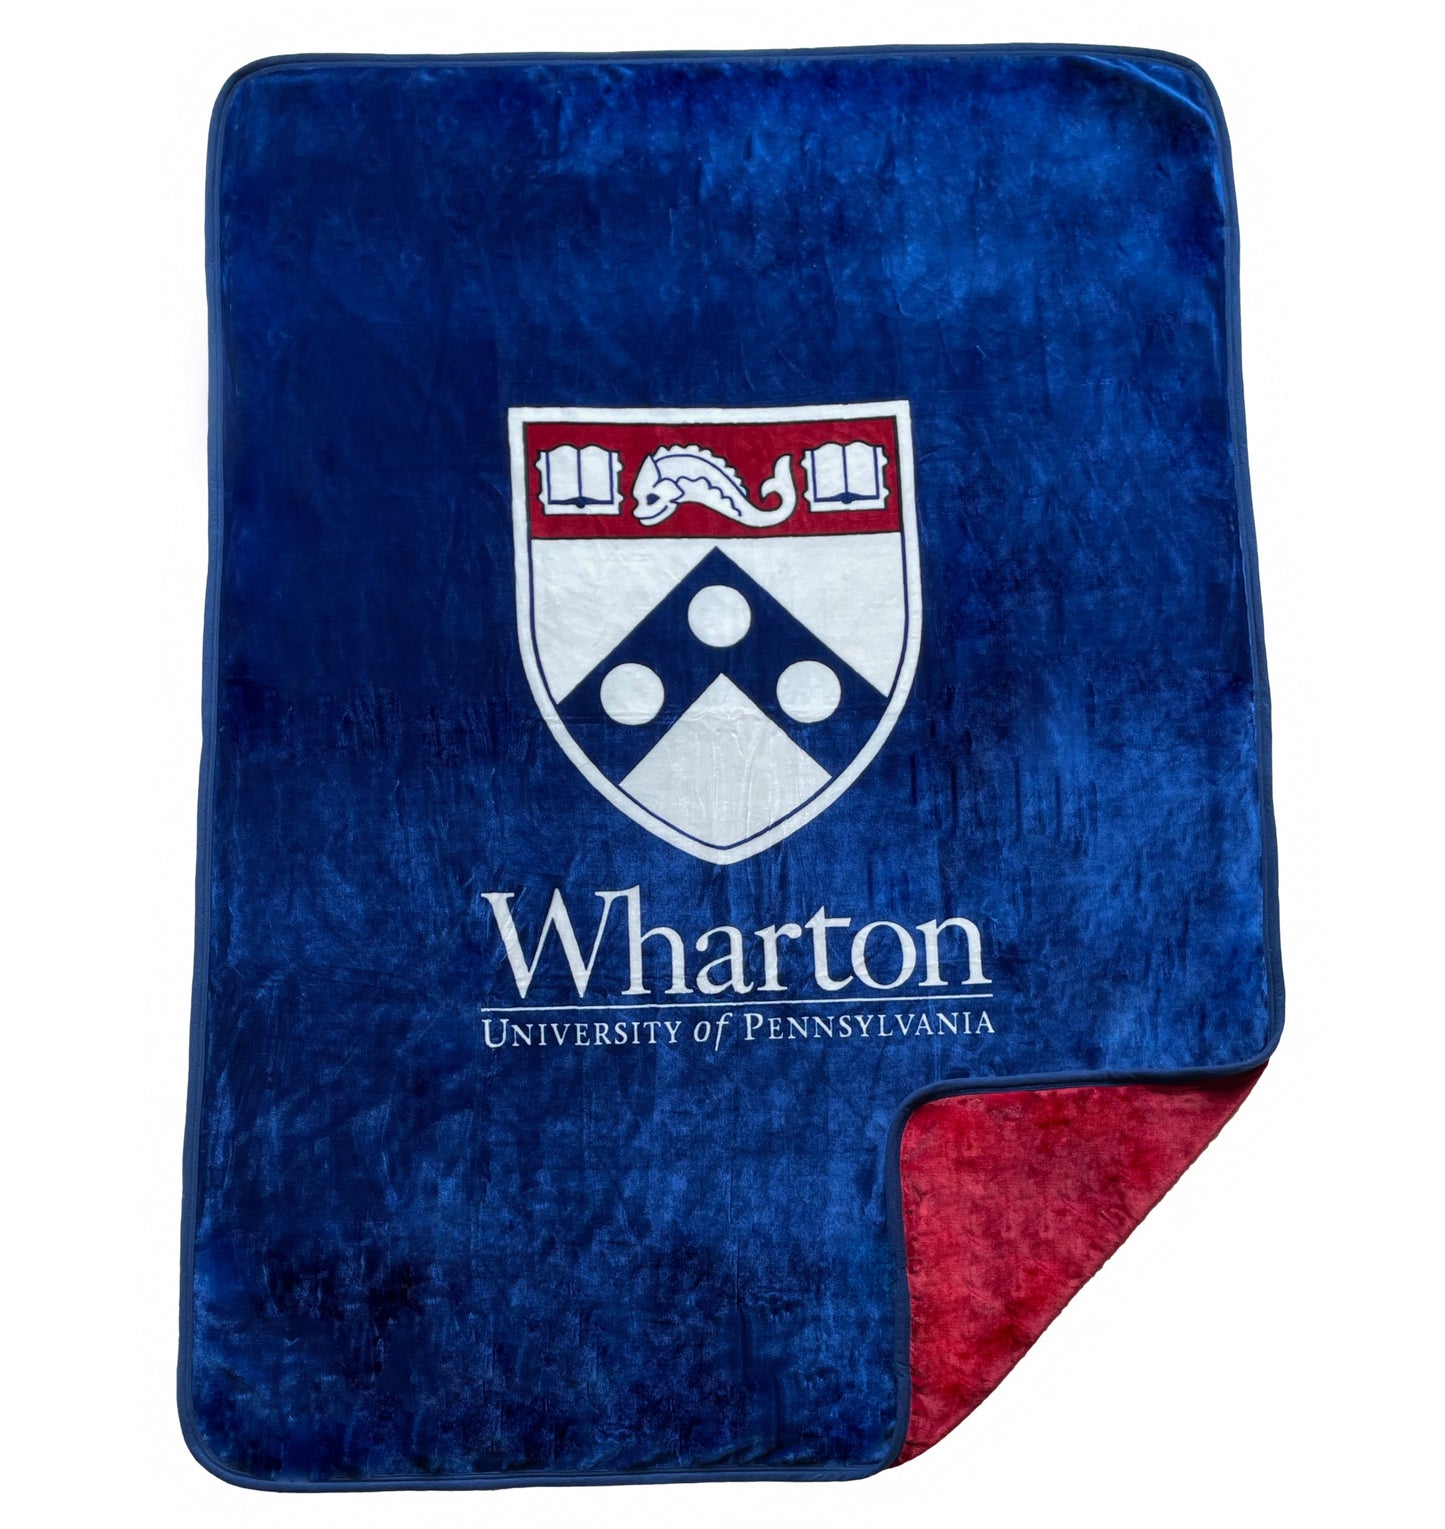 University of Pennsylvania - Wharton